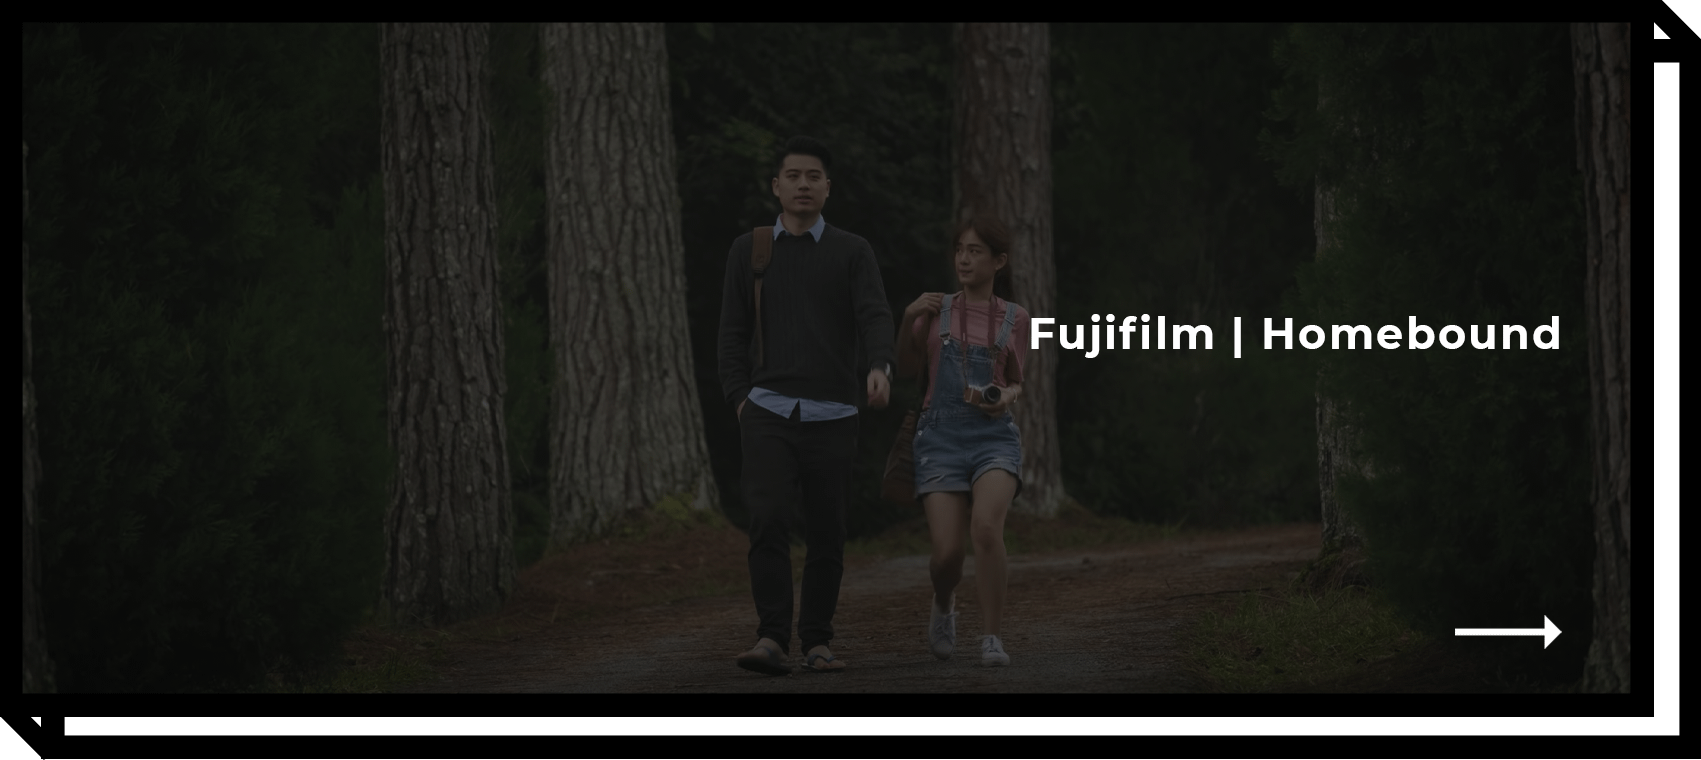 Fujifilm - Homebound